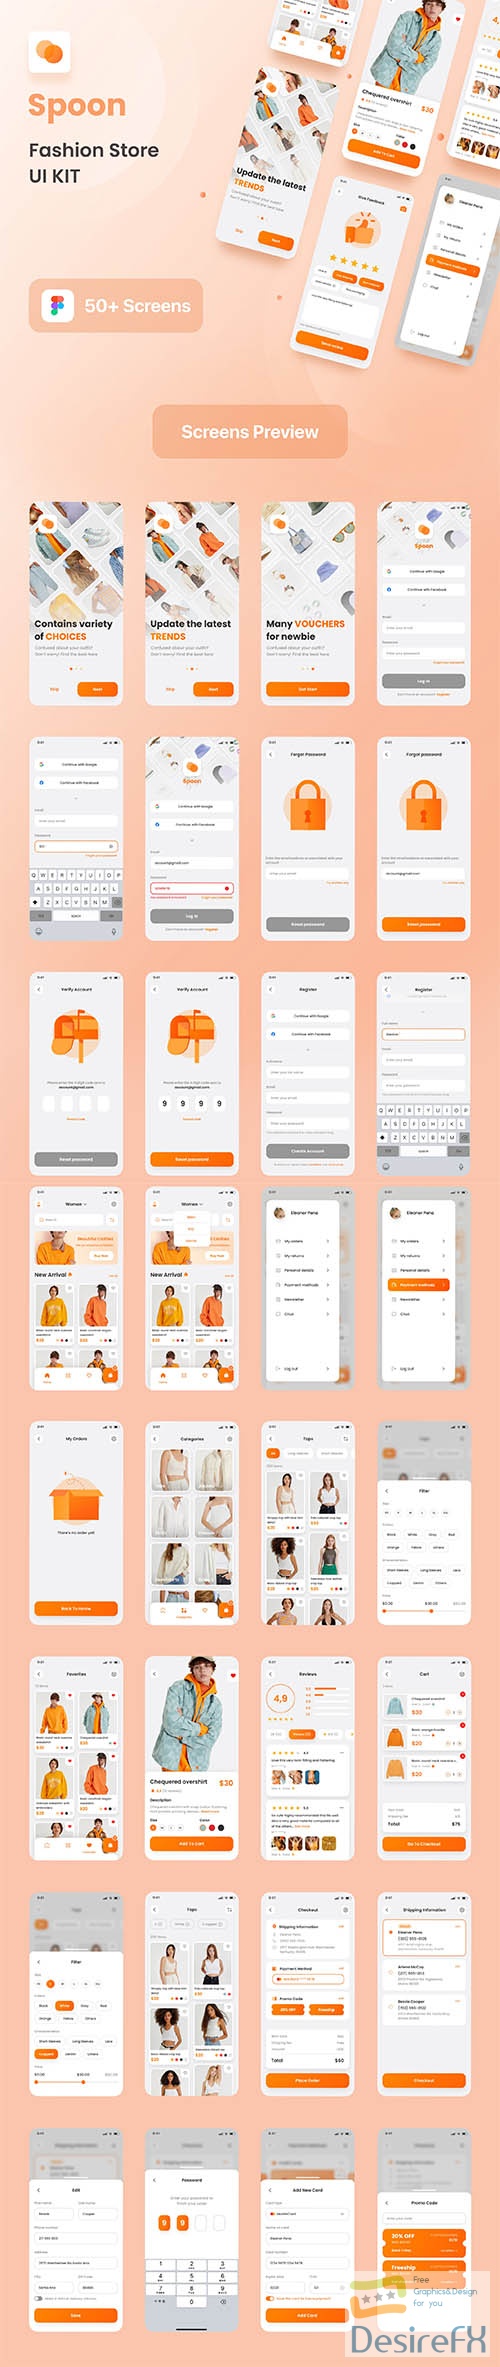 Spoon - Fashion Store UI Kit UI8